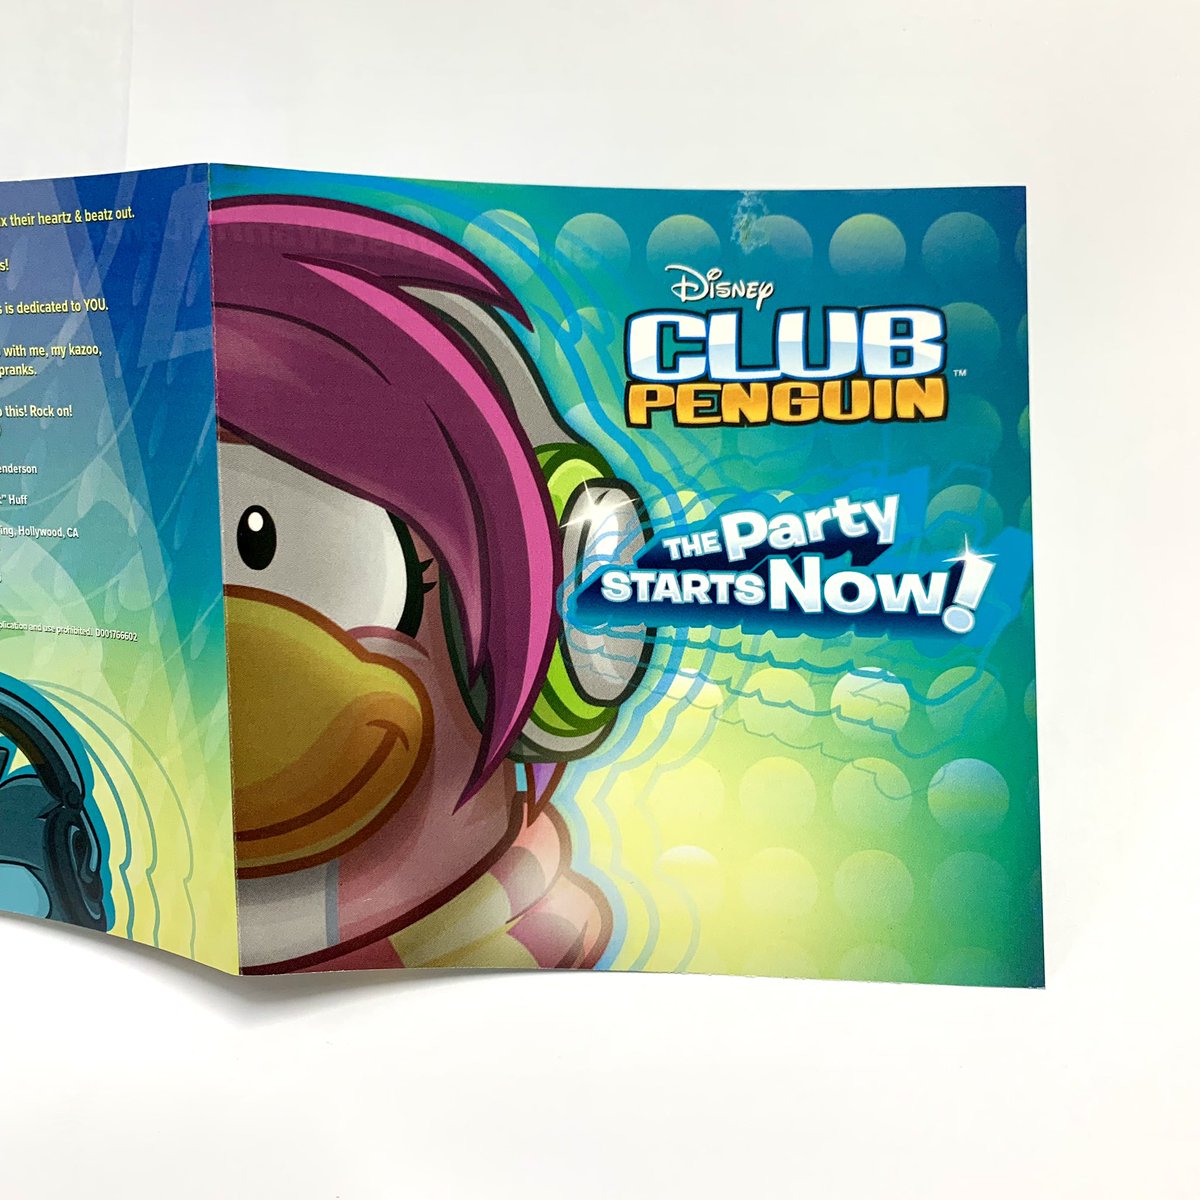 Downloading Risk of New Club Penguin? : r/ClubPenguin